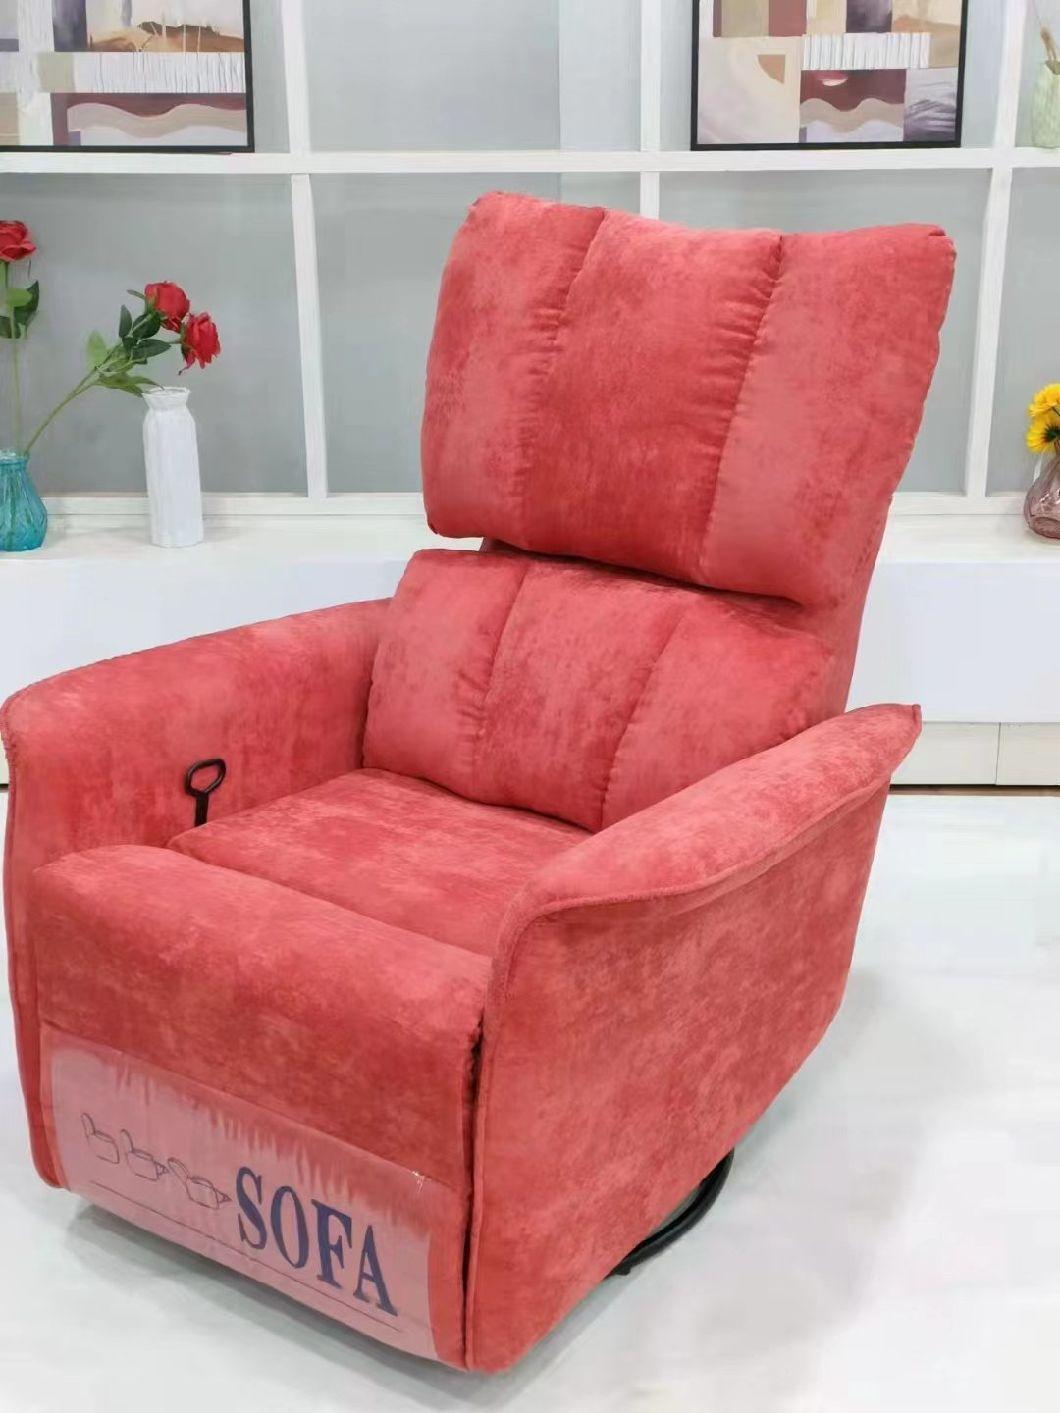 Comfortable Home Furniture Recliner Waiting Room Seats Metal Frame Chairs Single Sofa